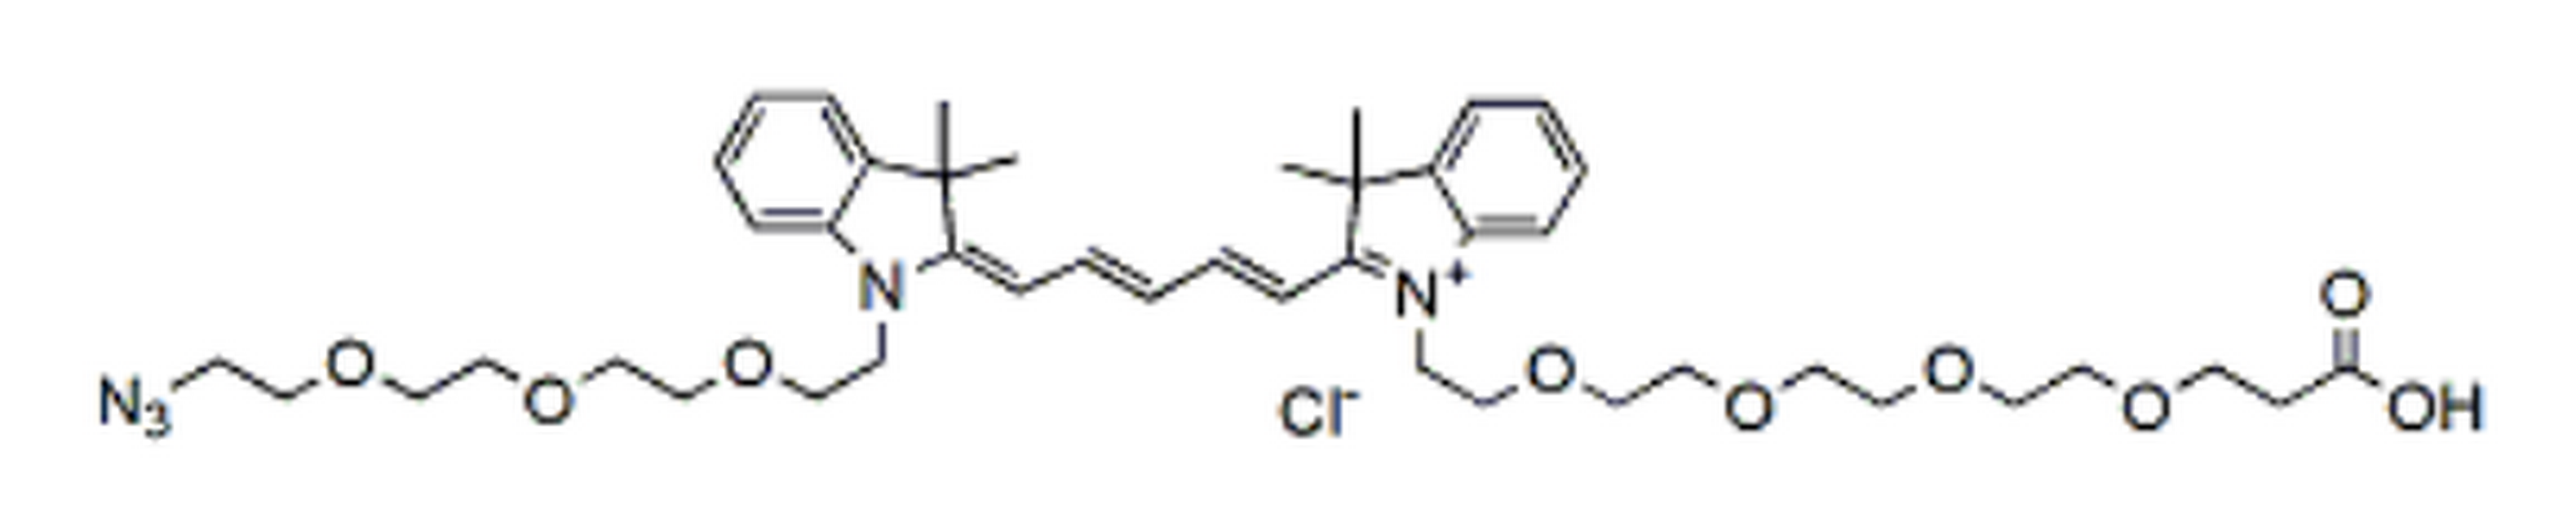 N-(azide-PEG3)-N'-(PEG4-acid)-Cy5